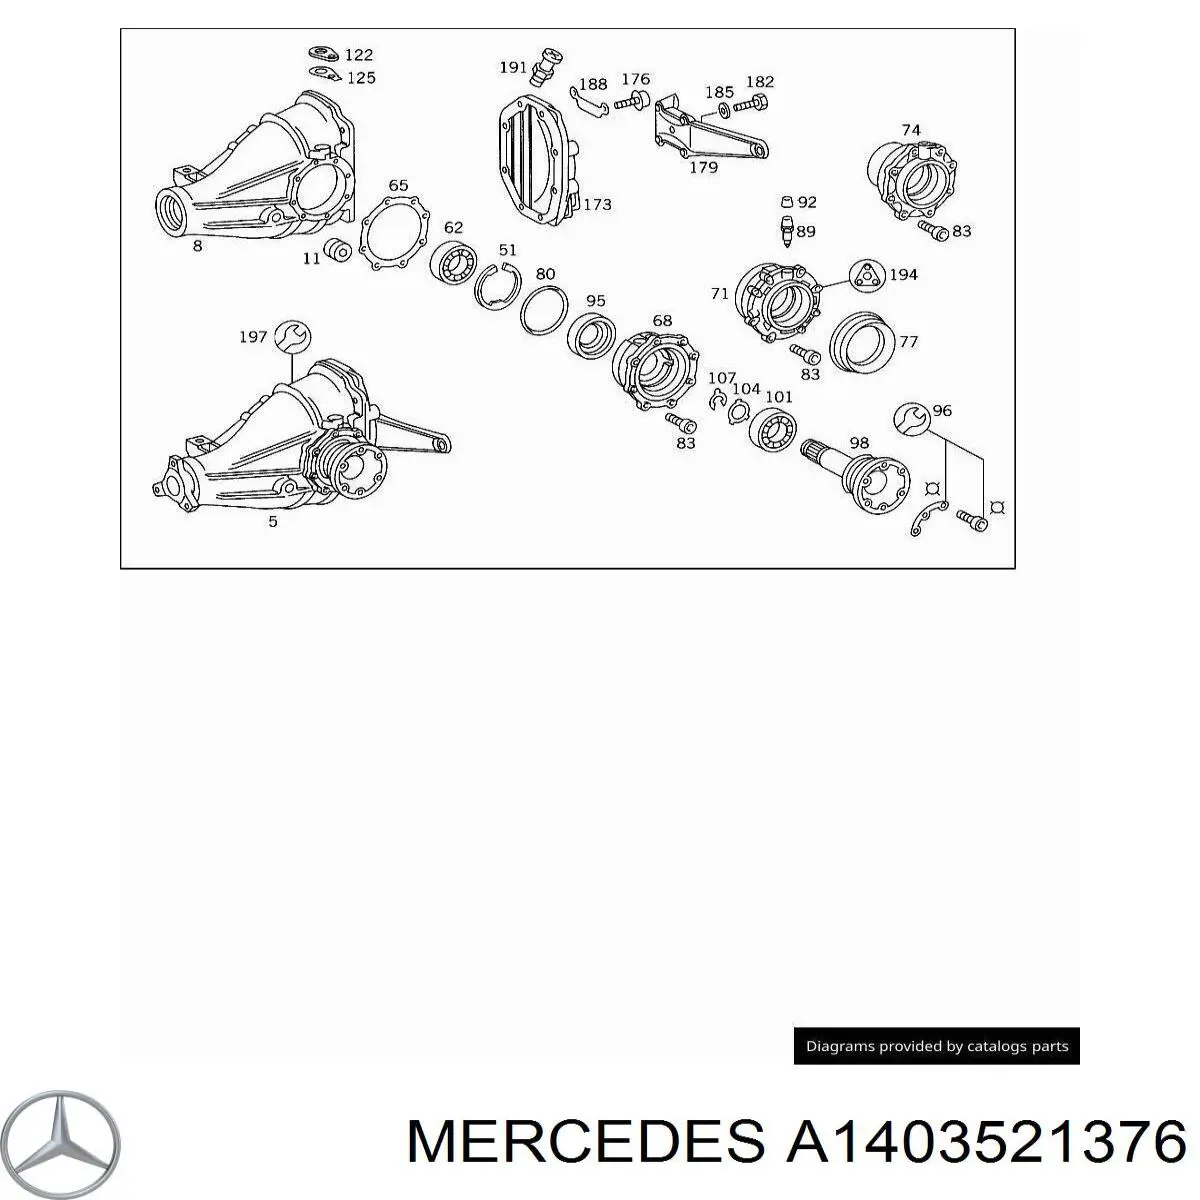 A1403521376 Mercedes